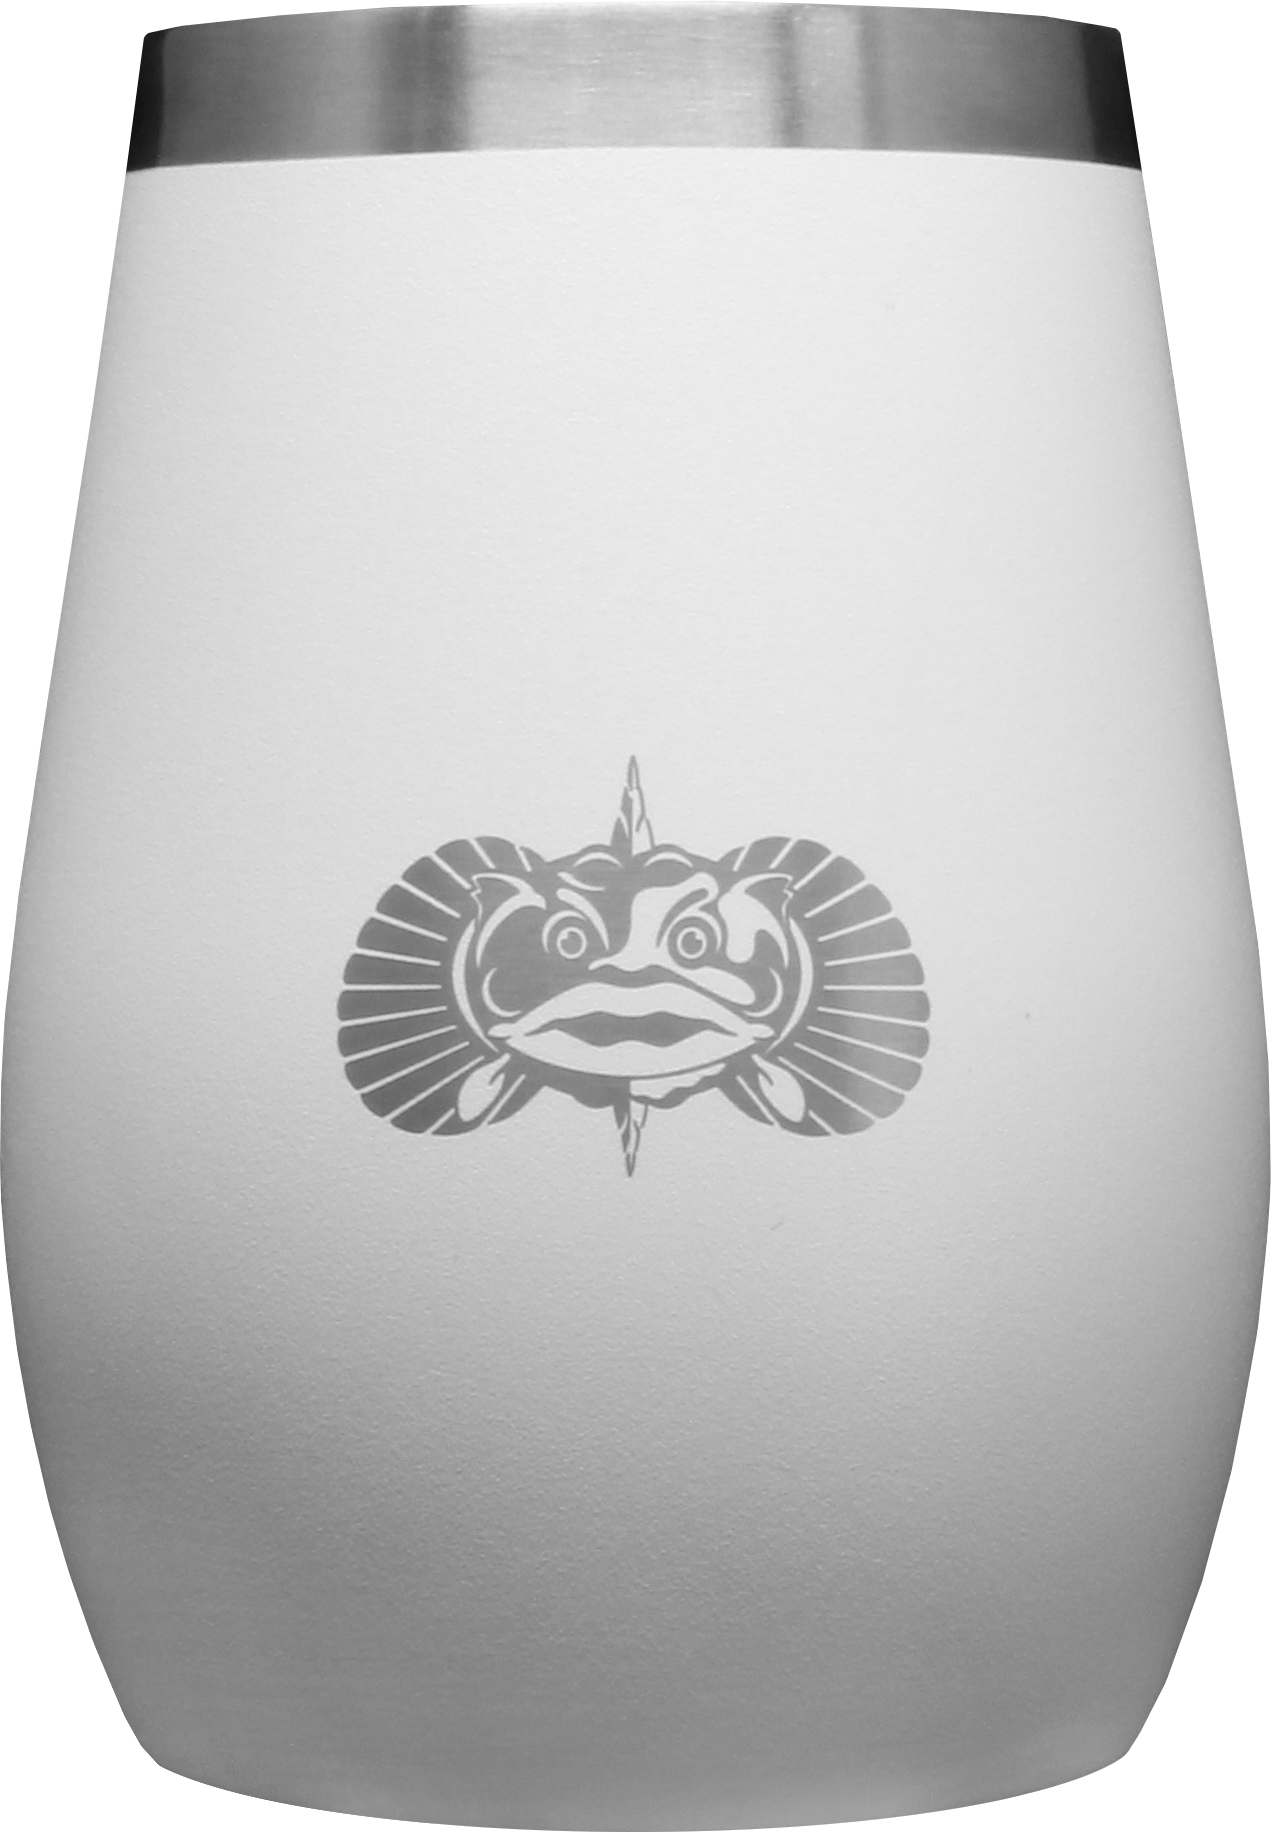 Toadfish Toadfish 30oz Tumbler - White